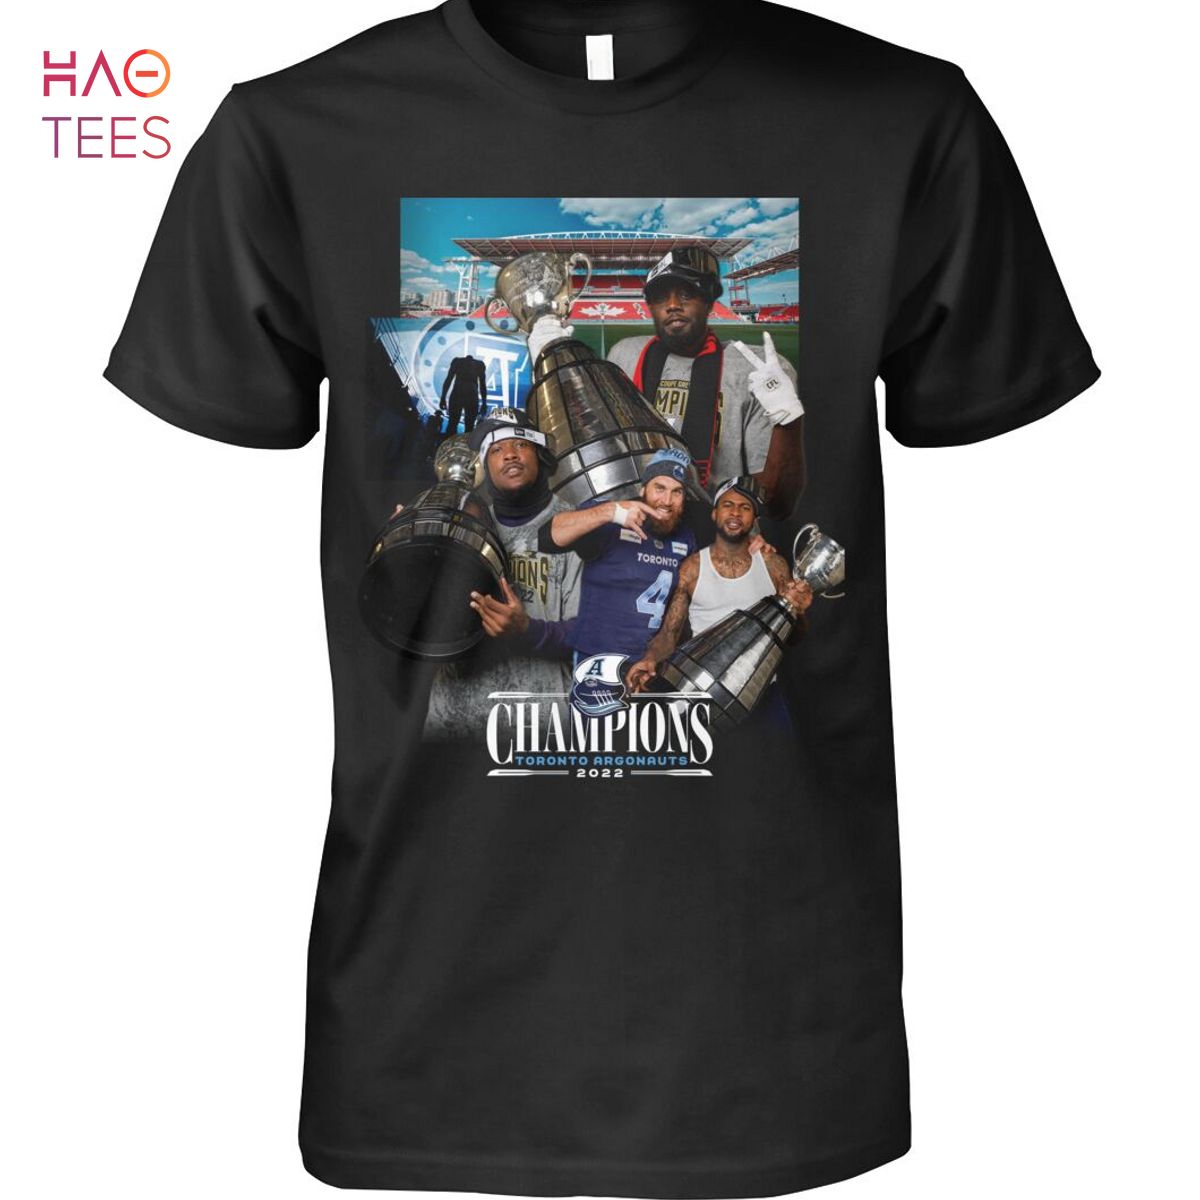 Champions Toronto Argonauts 2022 Shirt Limited Edition